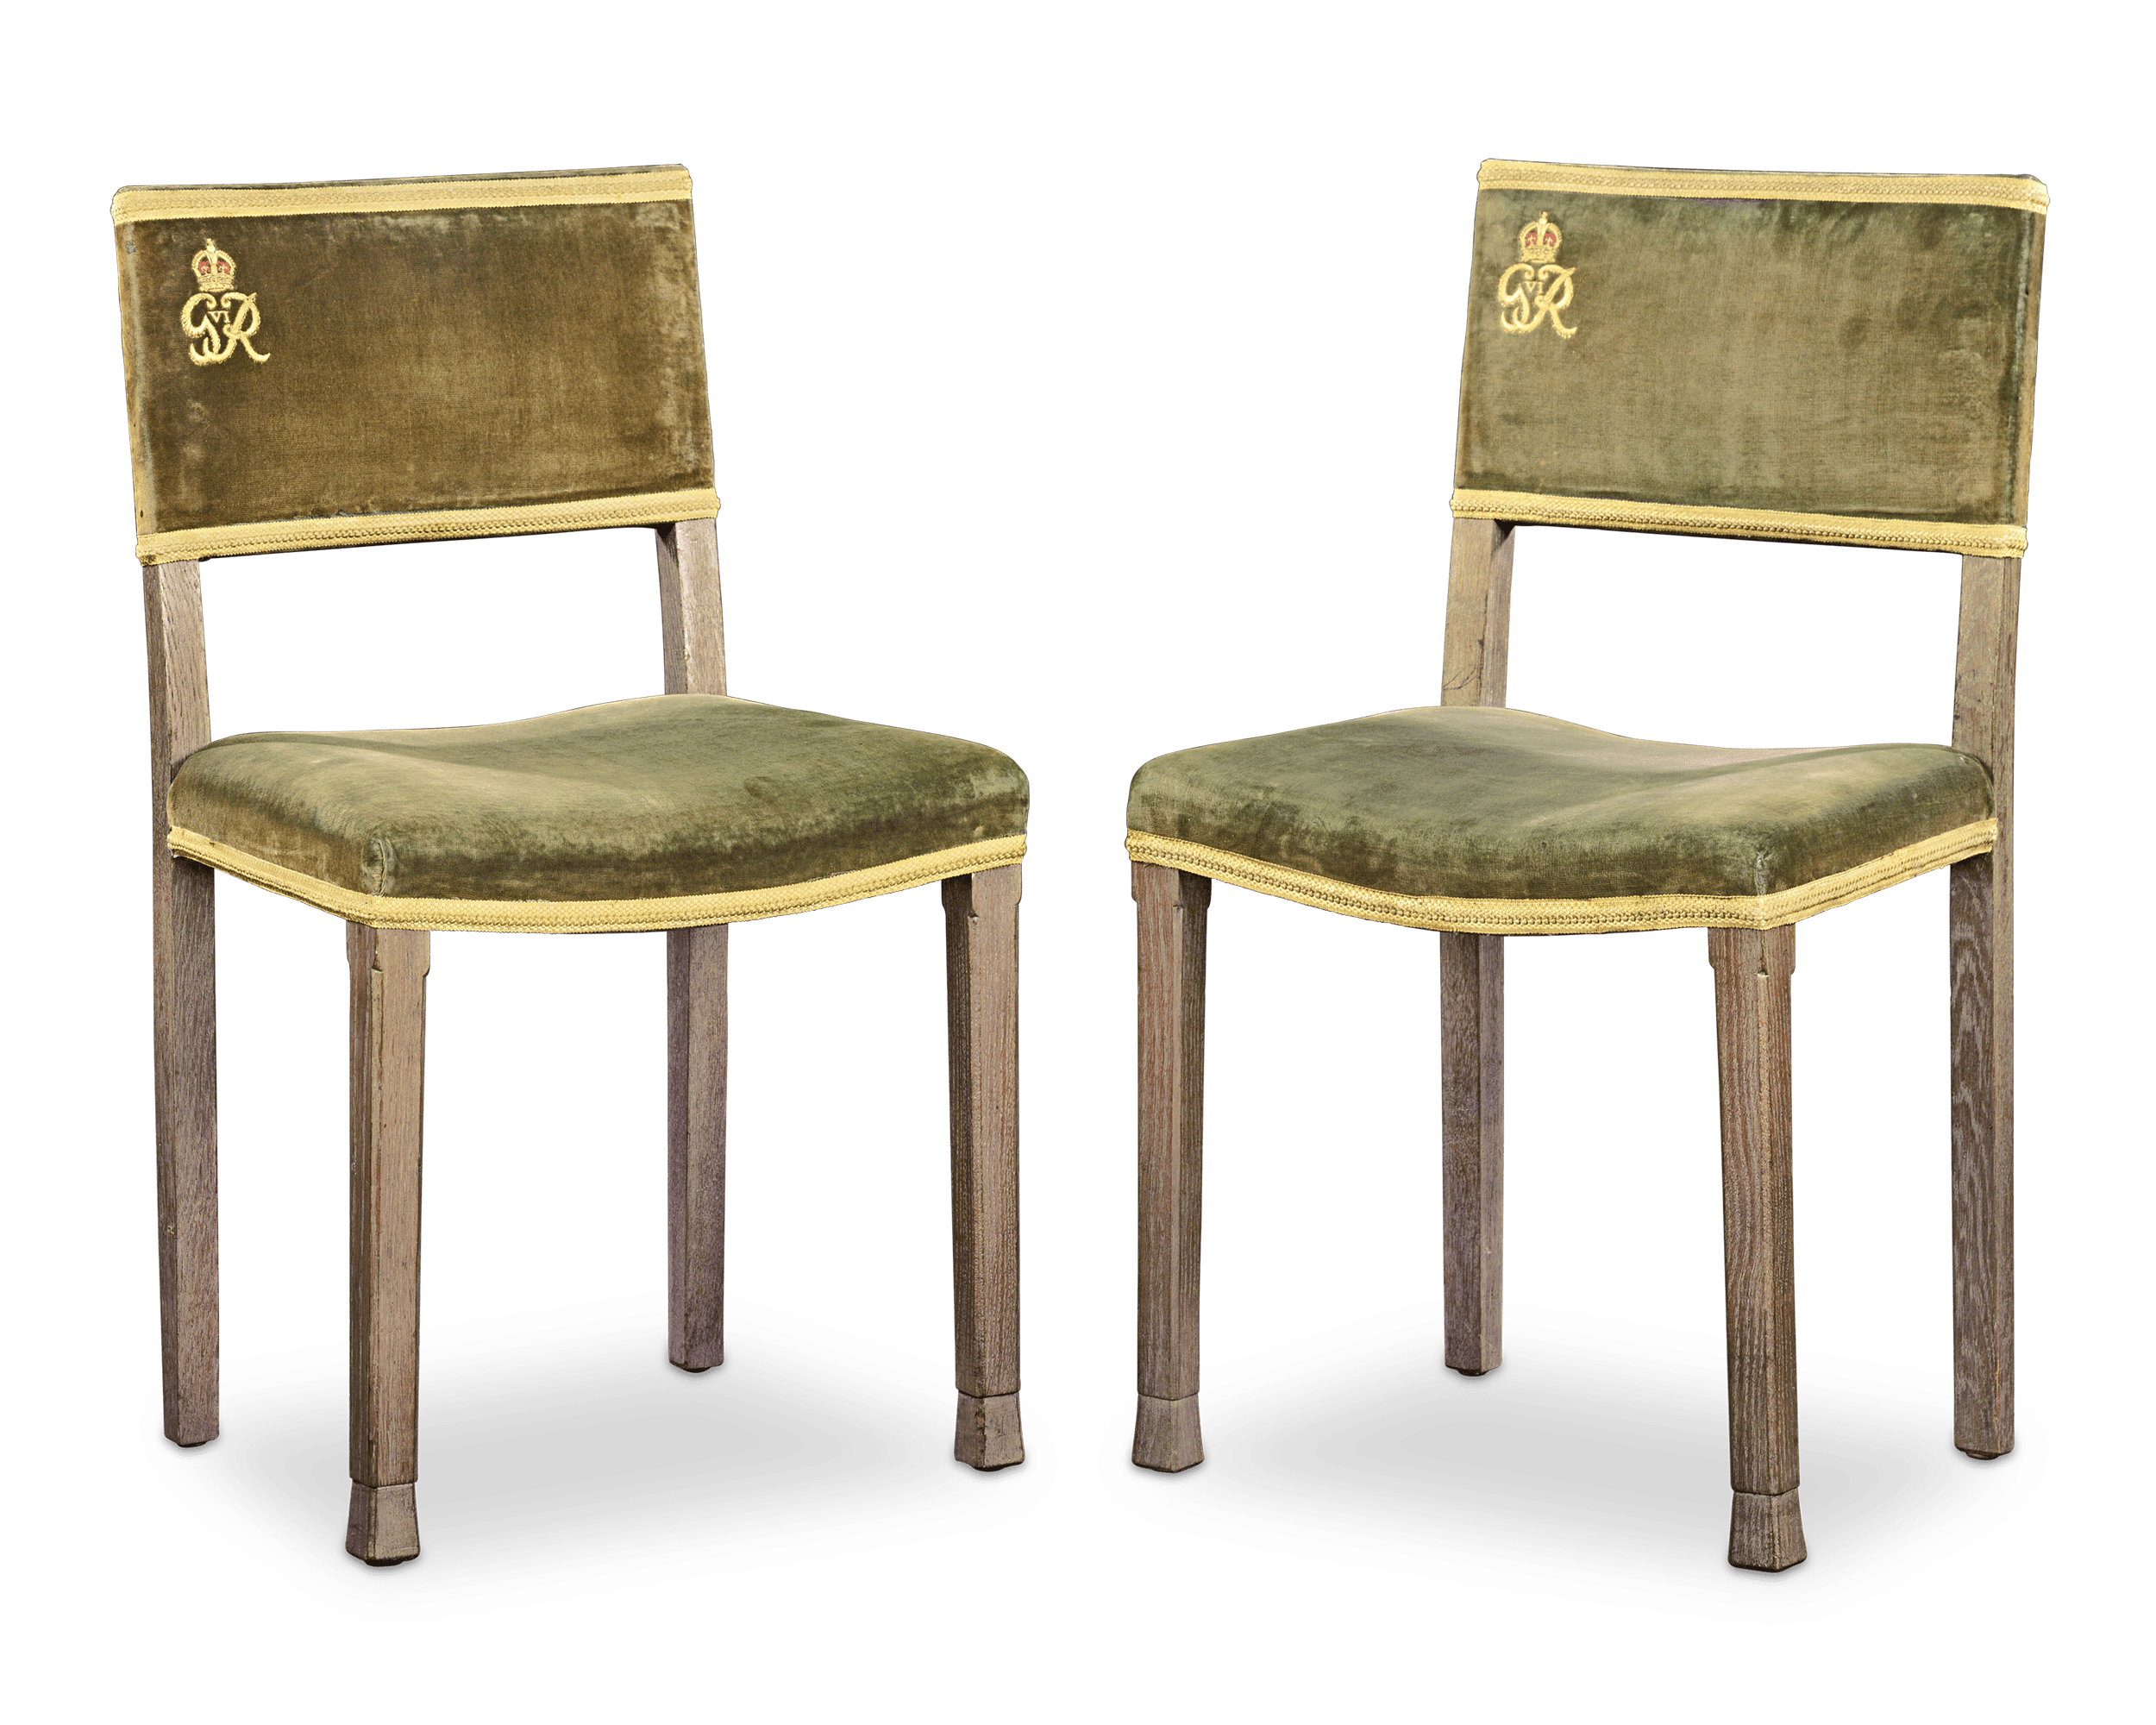 King George VI Coronation Chairs